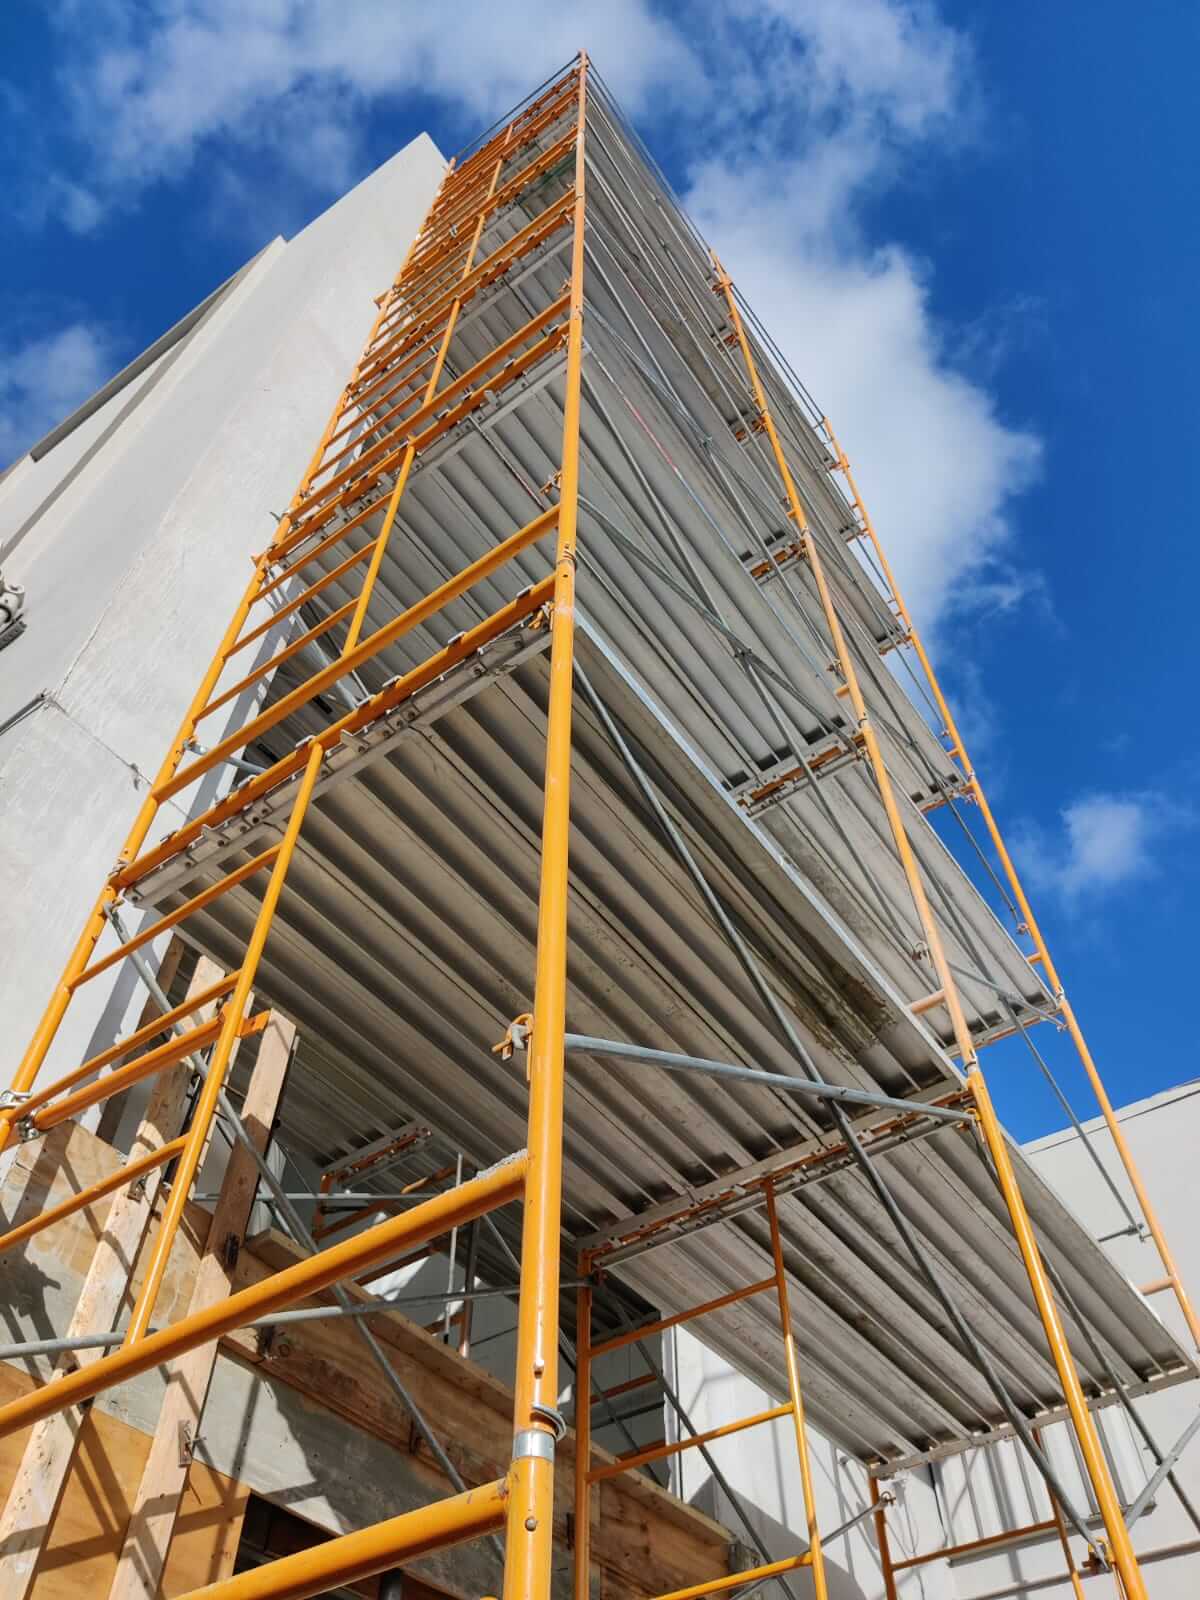 scaffolding rental prices